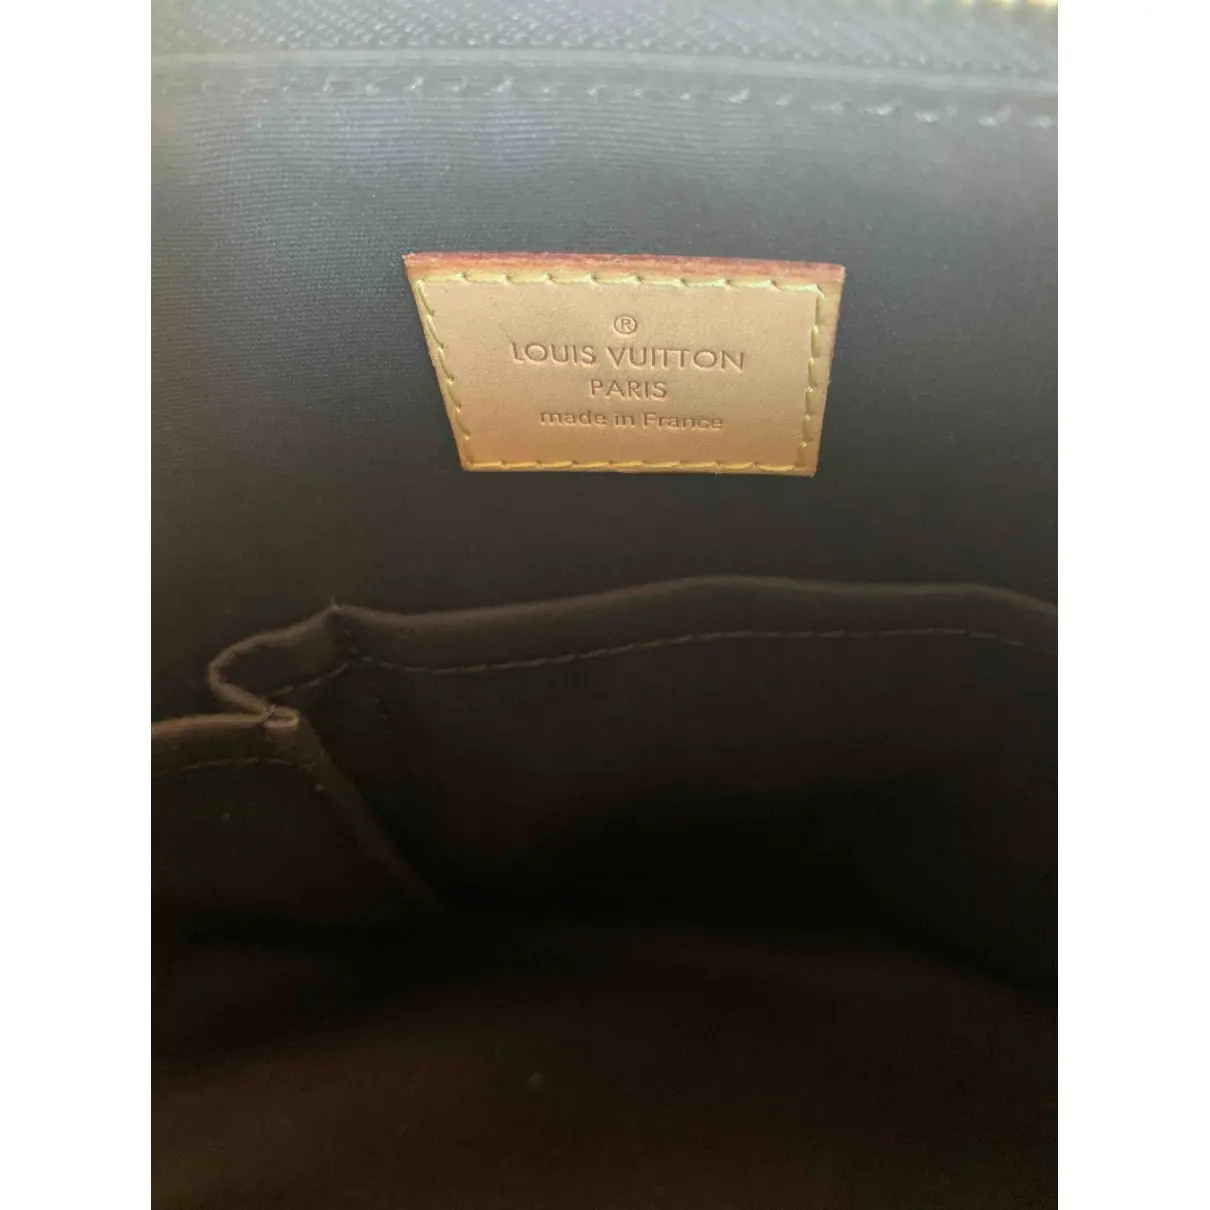 Buy Louis Vuitton Bellevue patent leather handbag online